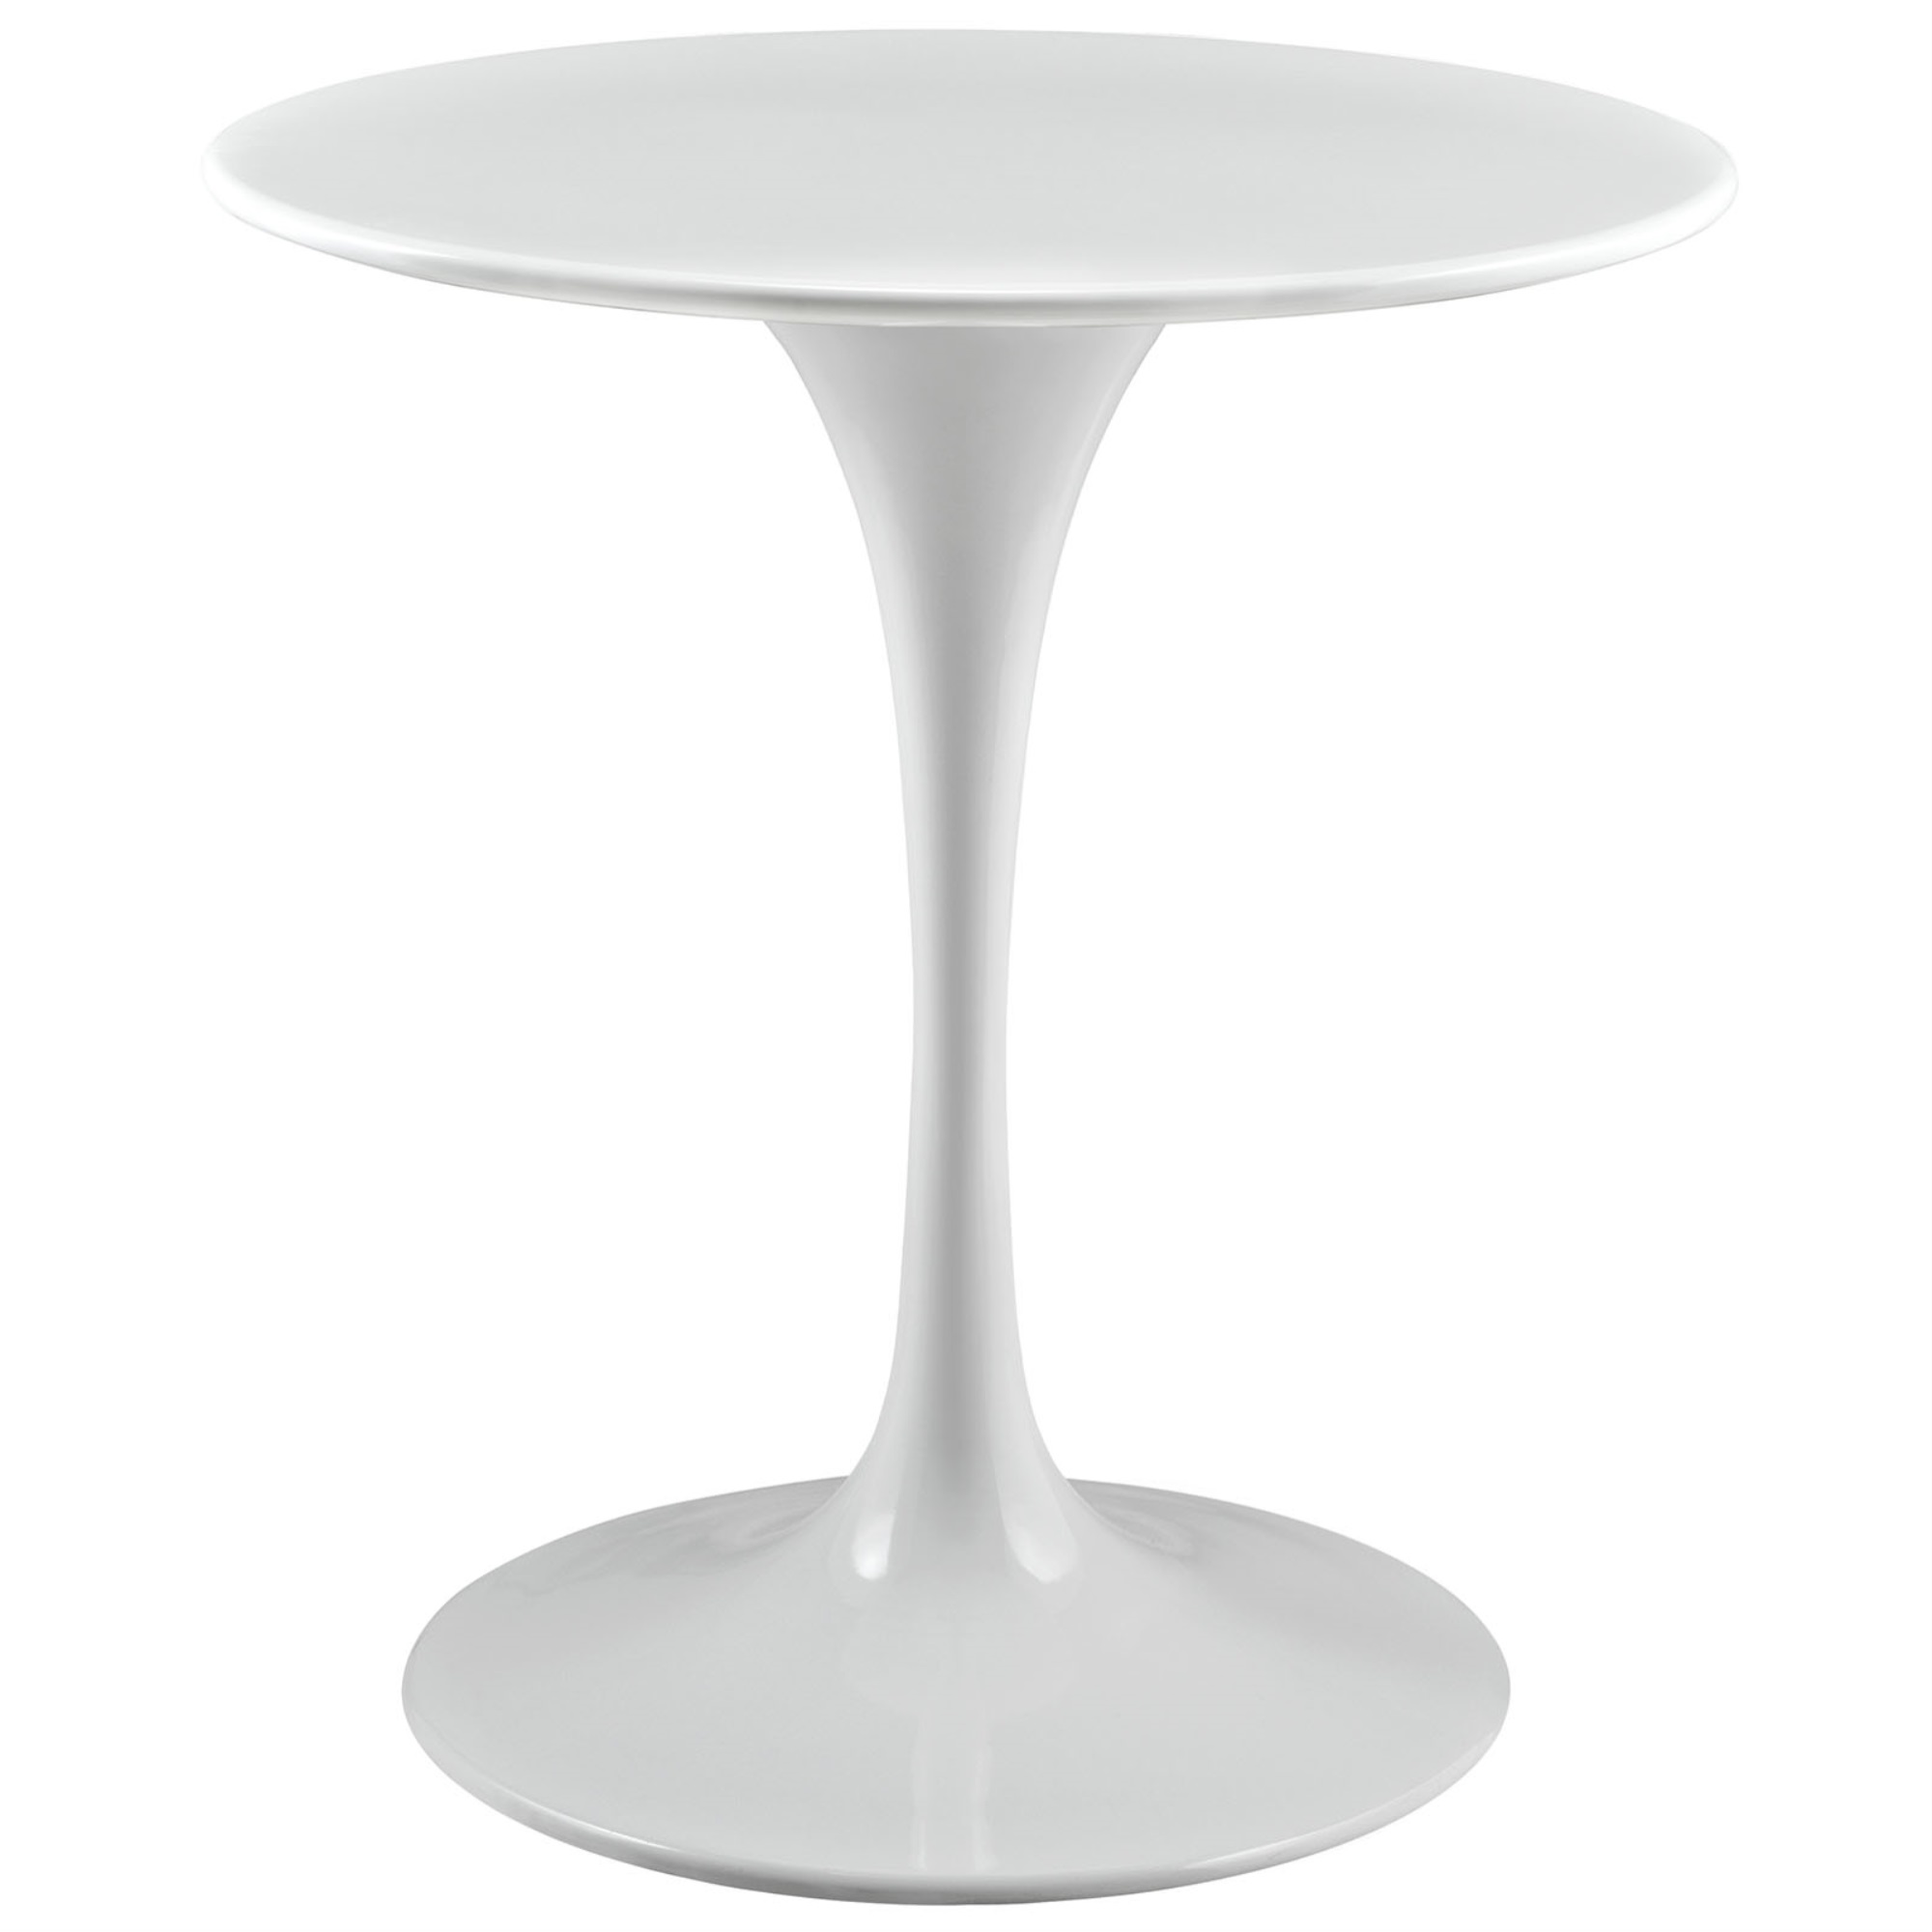 Ergode Lippa 28" Round Wood Top Dining Table - White